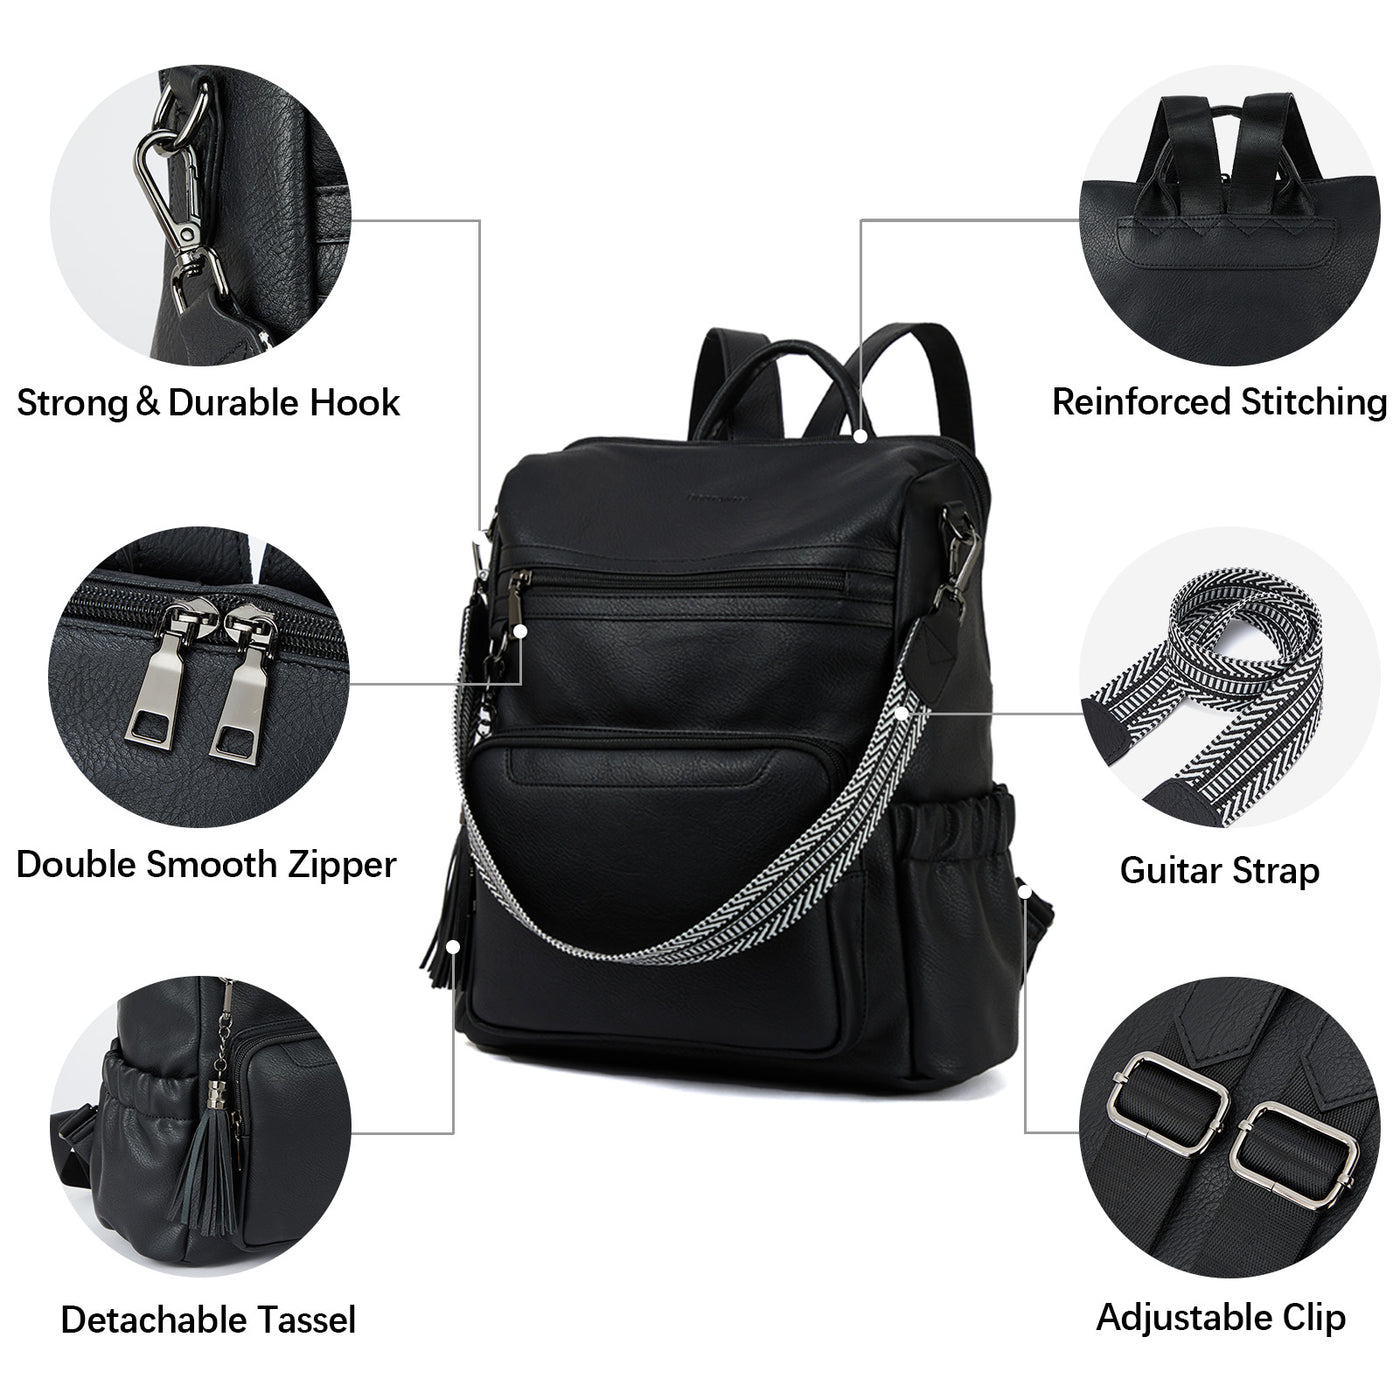 Nombongo Large Convertible Backpack Travel Bag